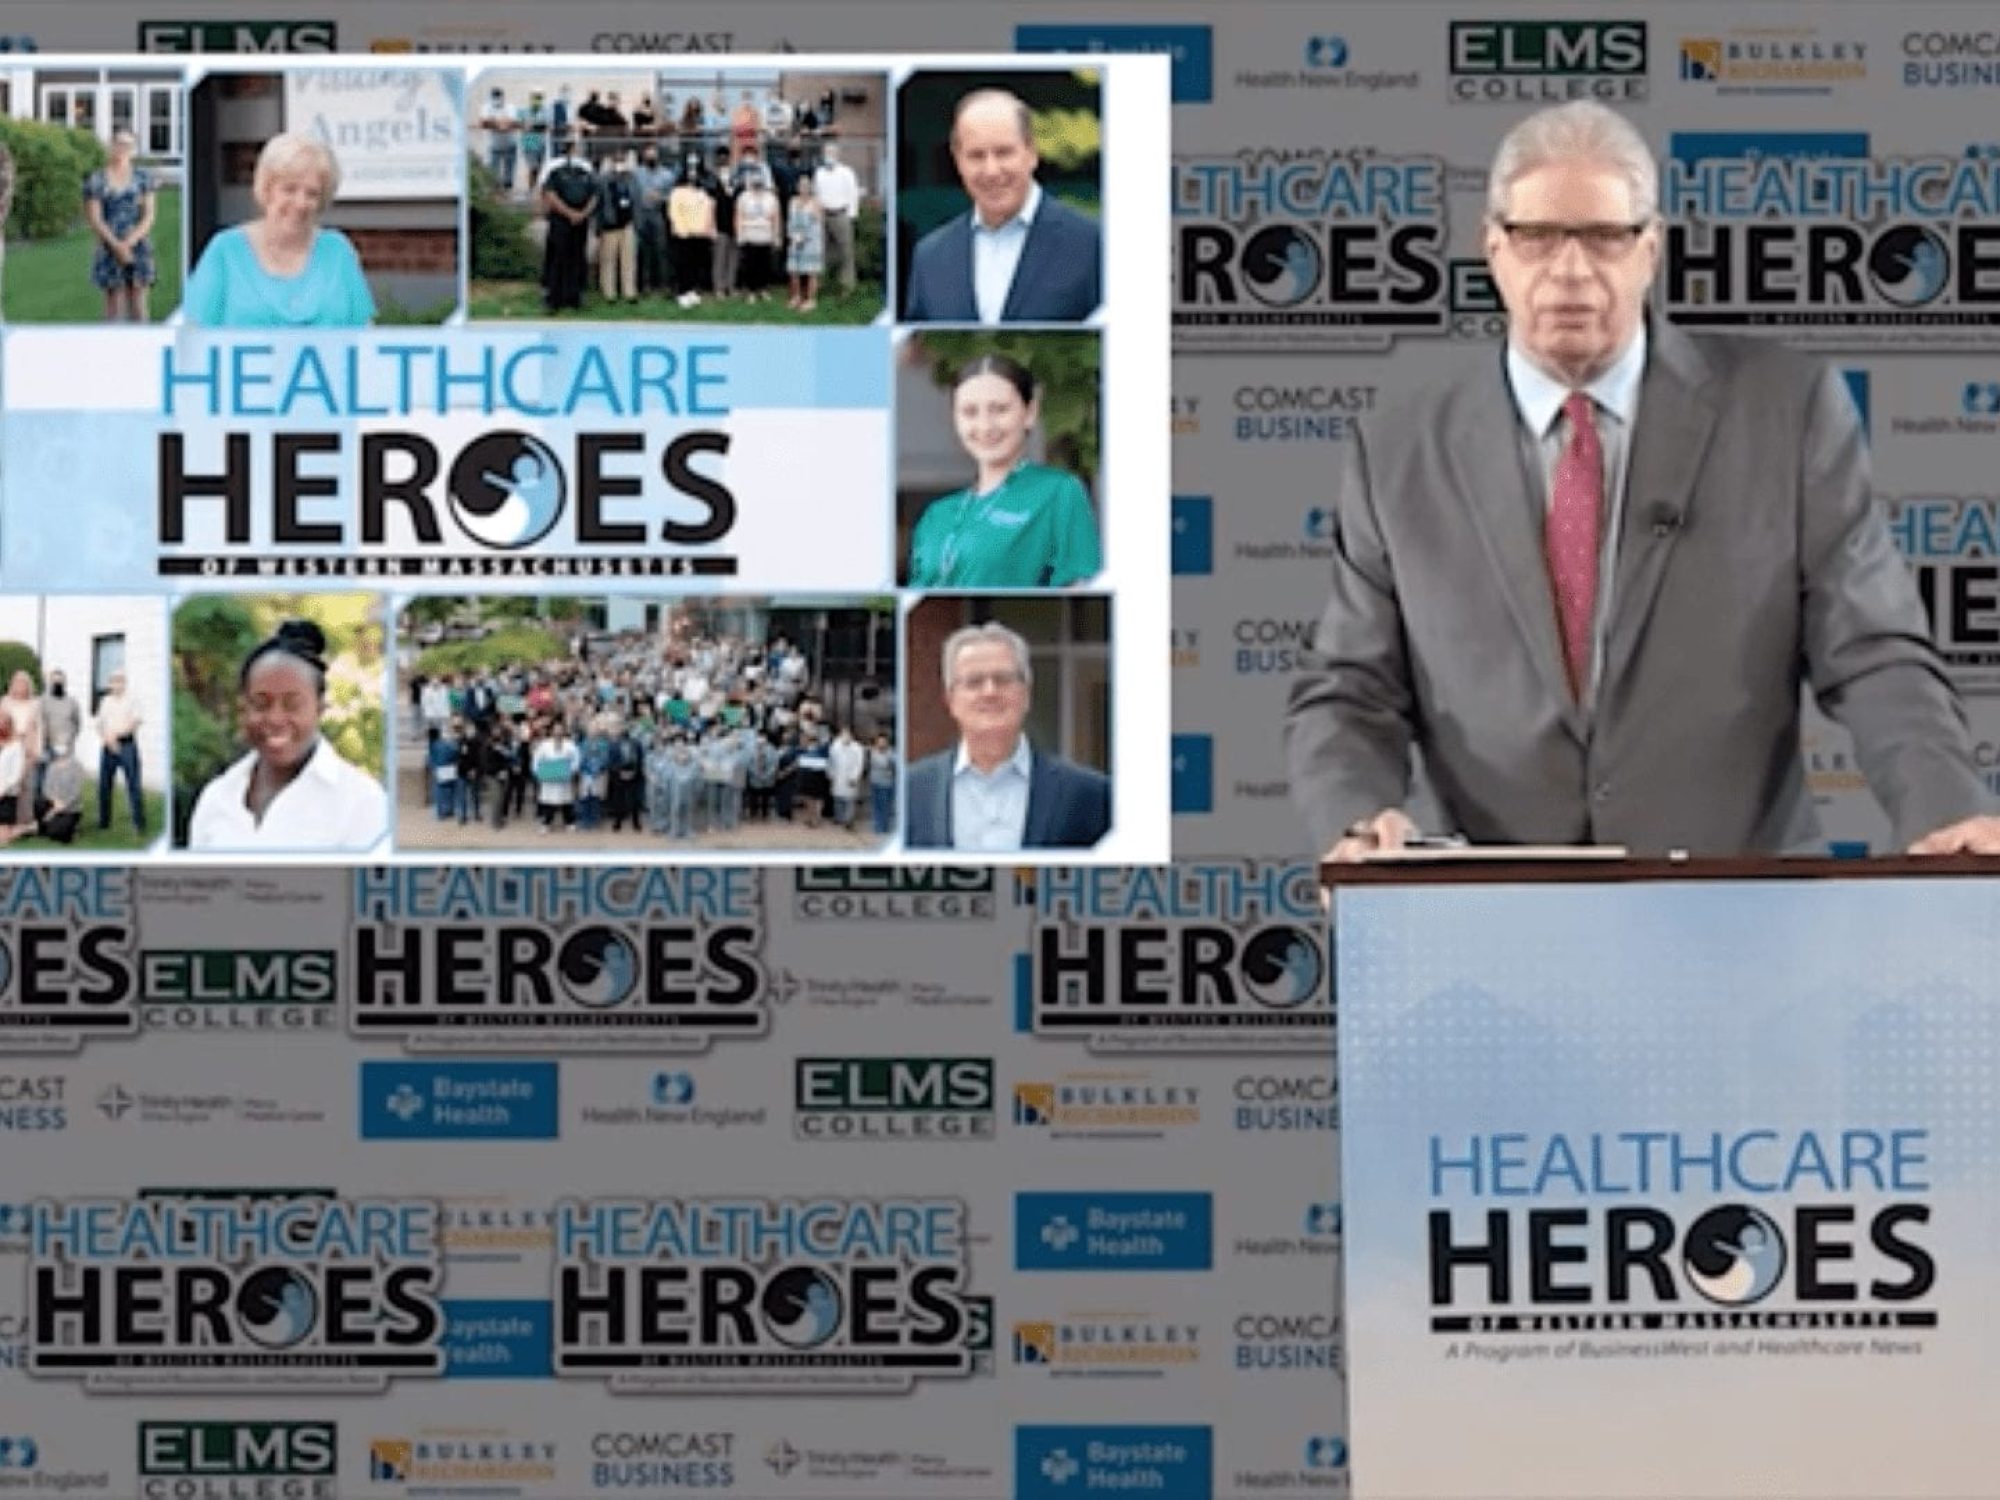 healthcare heroes